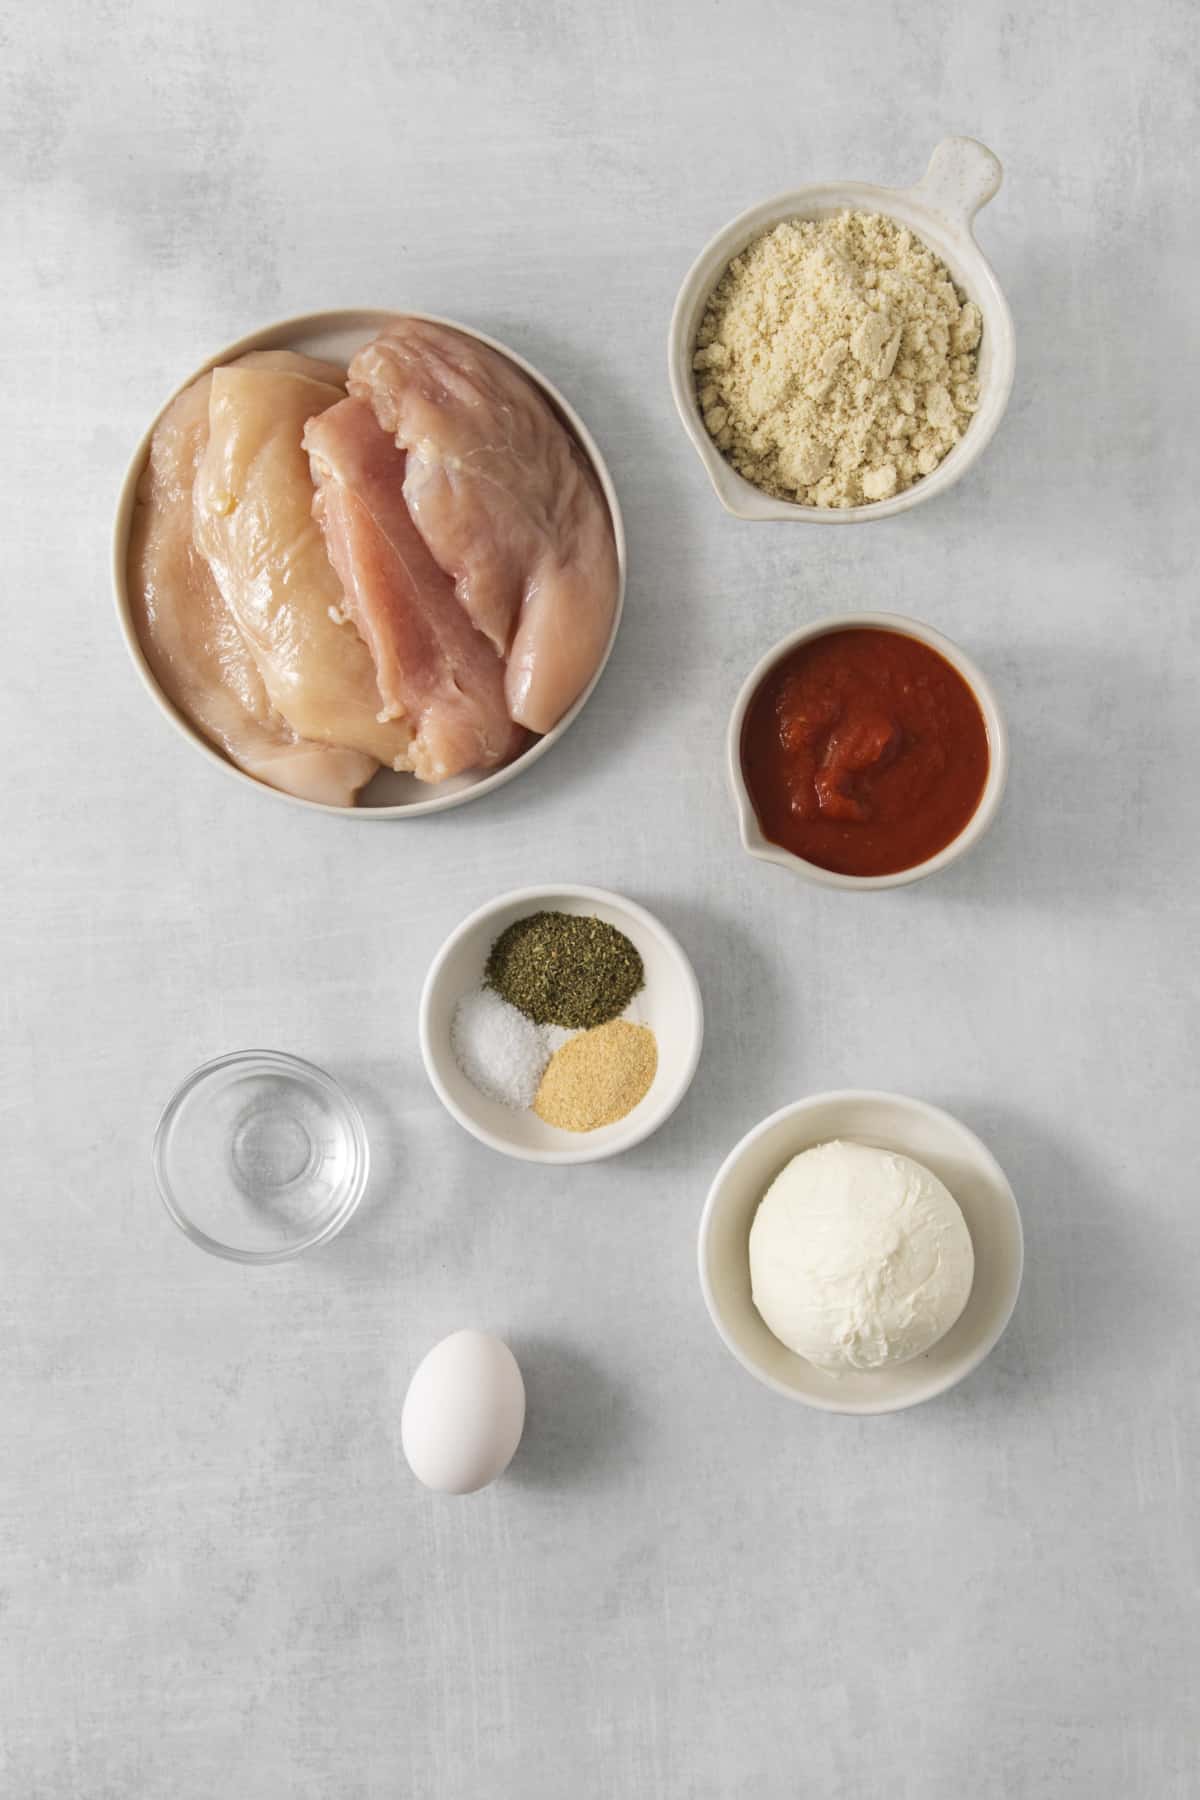 chicken parmesan ingredients in separate dishes.